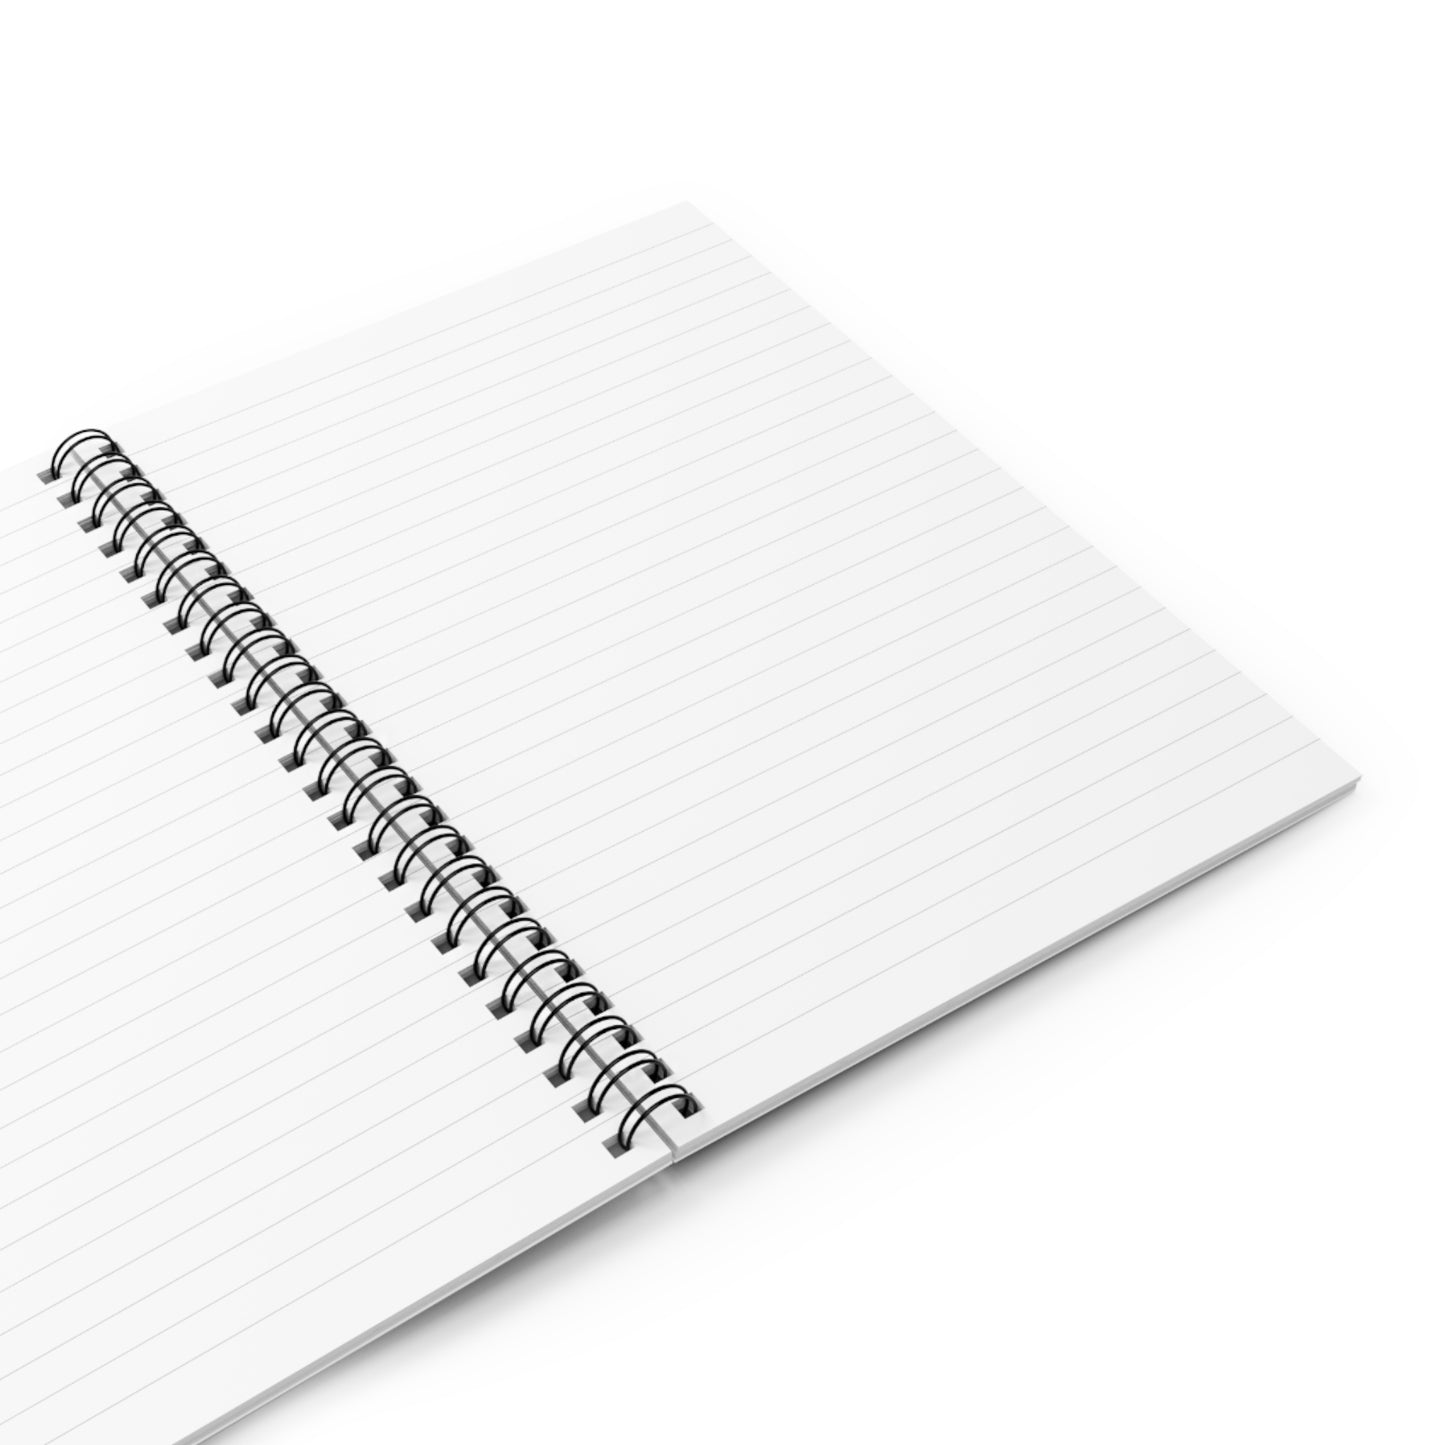 Stylish Pale Prim Spiral Notebook - Ruled Line